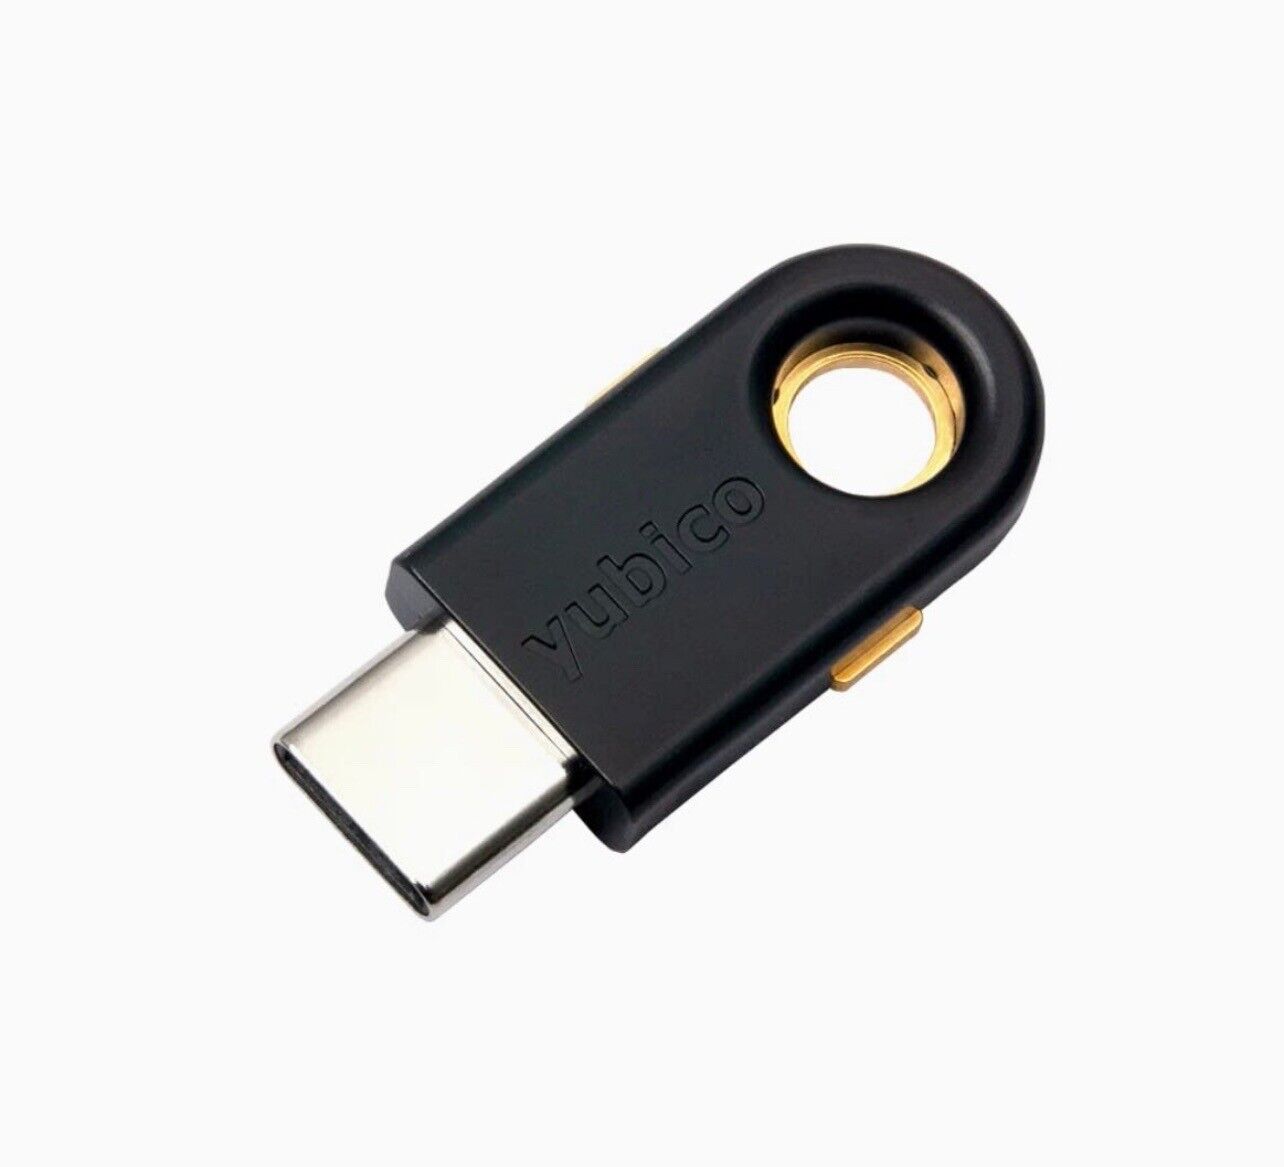 Yubico YubiKey 5C - Two Factor Authentication USB Security Key, Fits USB-C Ports